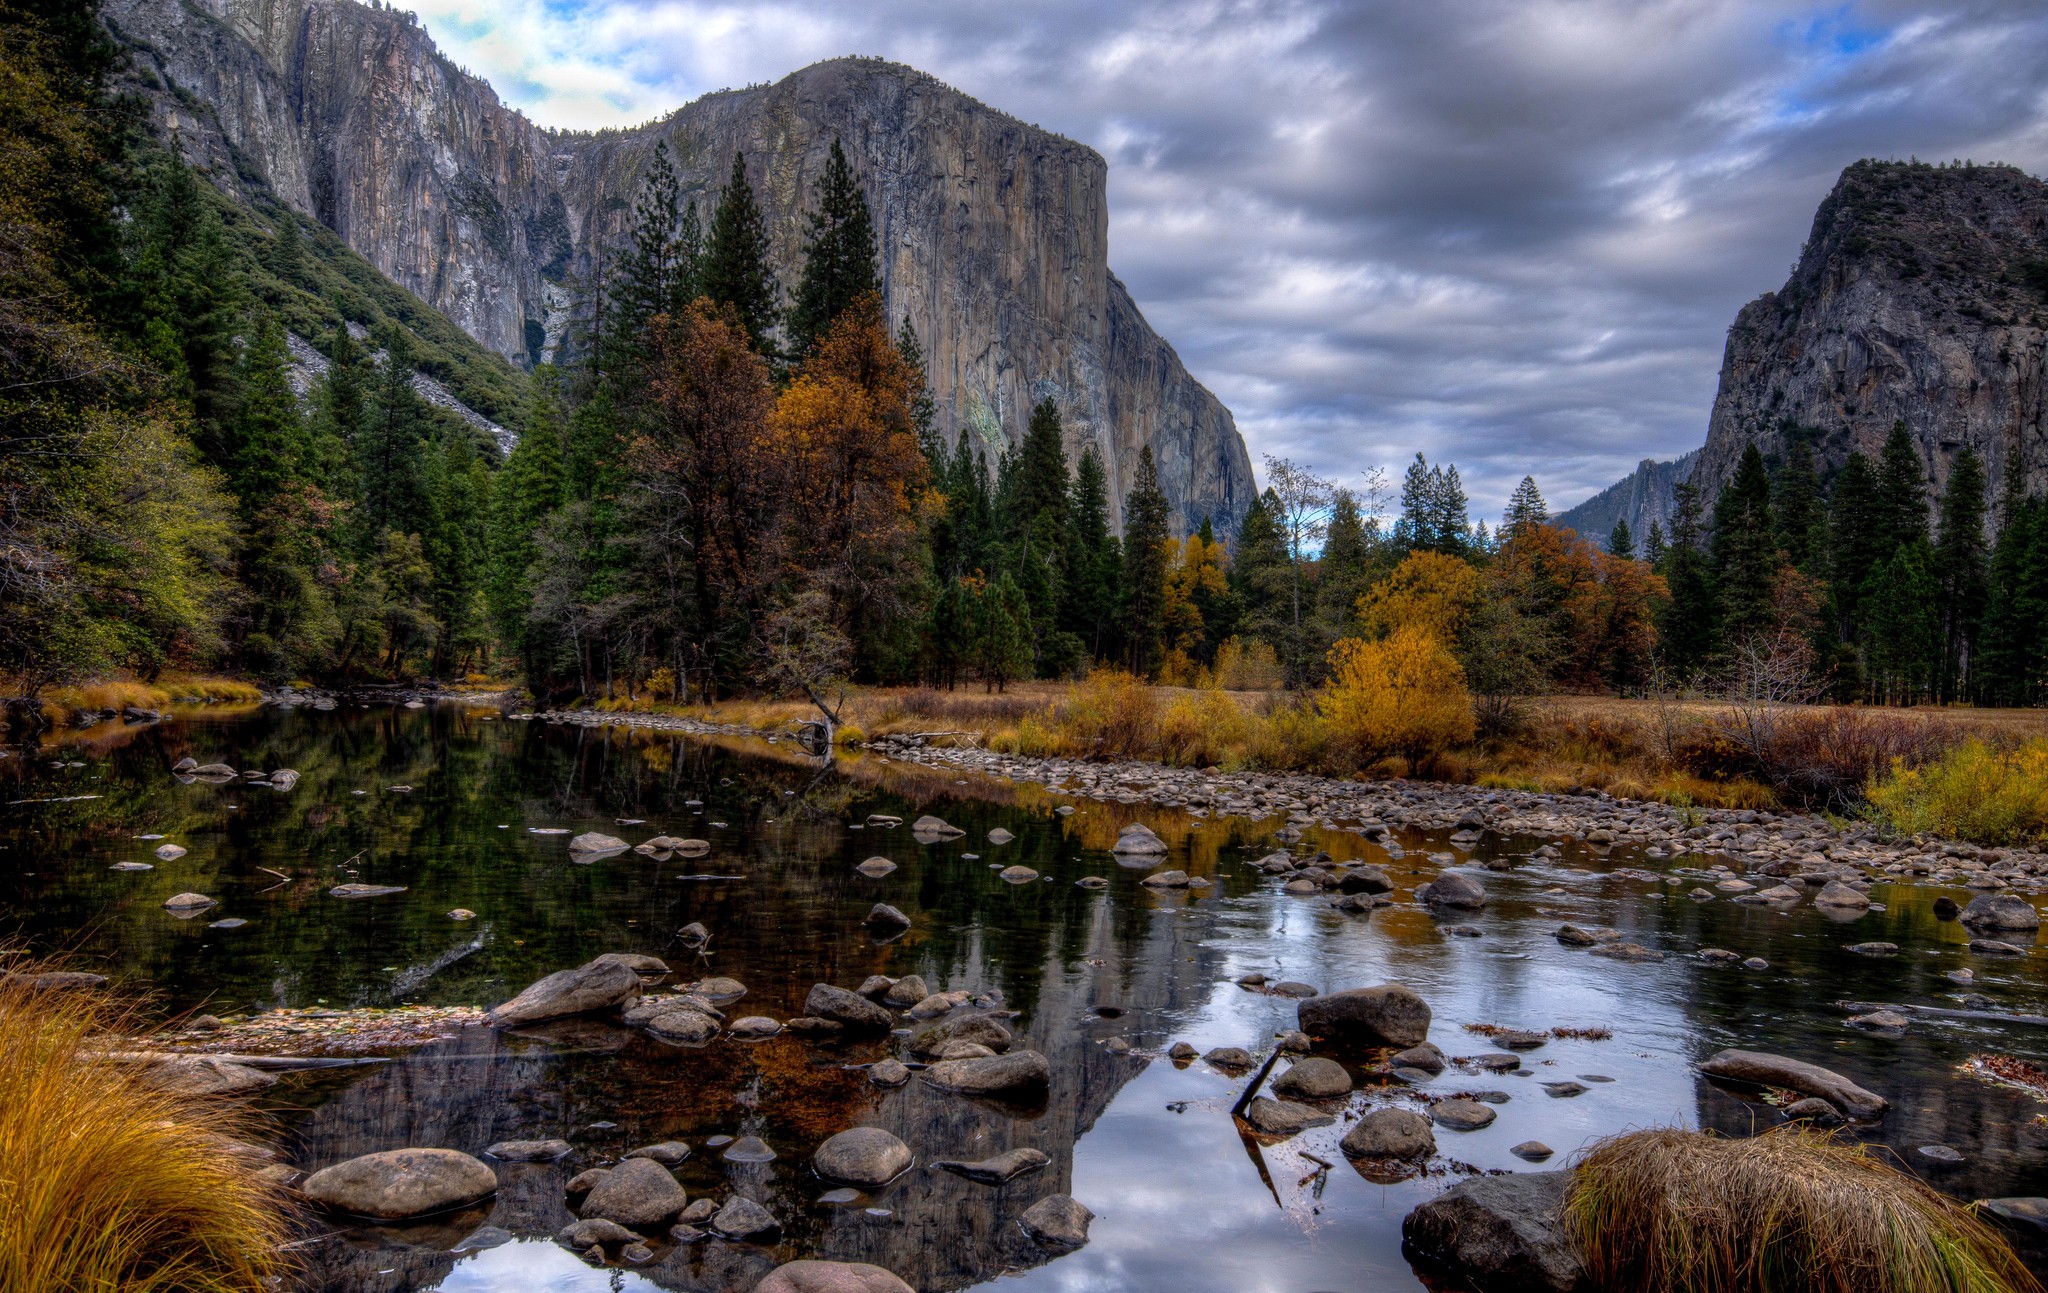 General 2048x1293 nature landscape mountains river pine trees El Capitan Yosemite National Park USA California